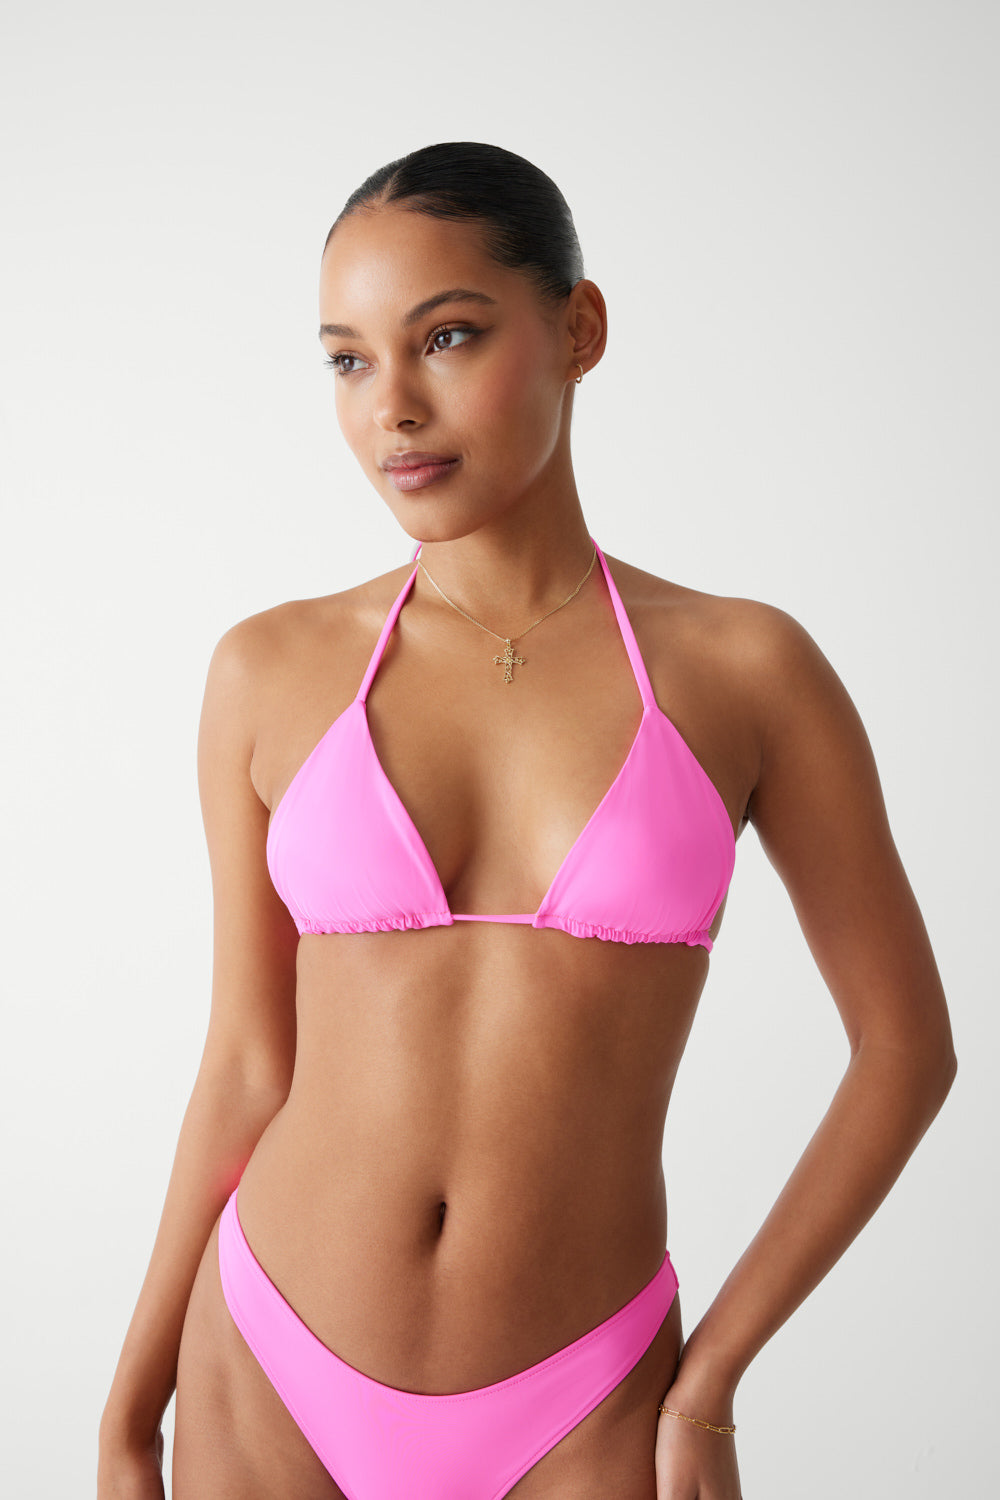 Decree Adjustable Straps Neon Bralette Bikini Swimsuit Top, Color